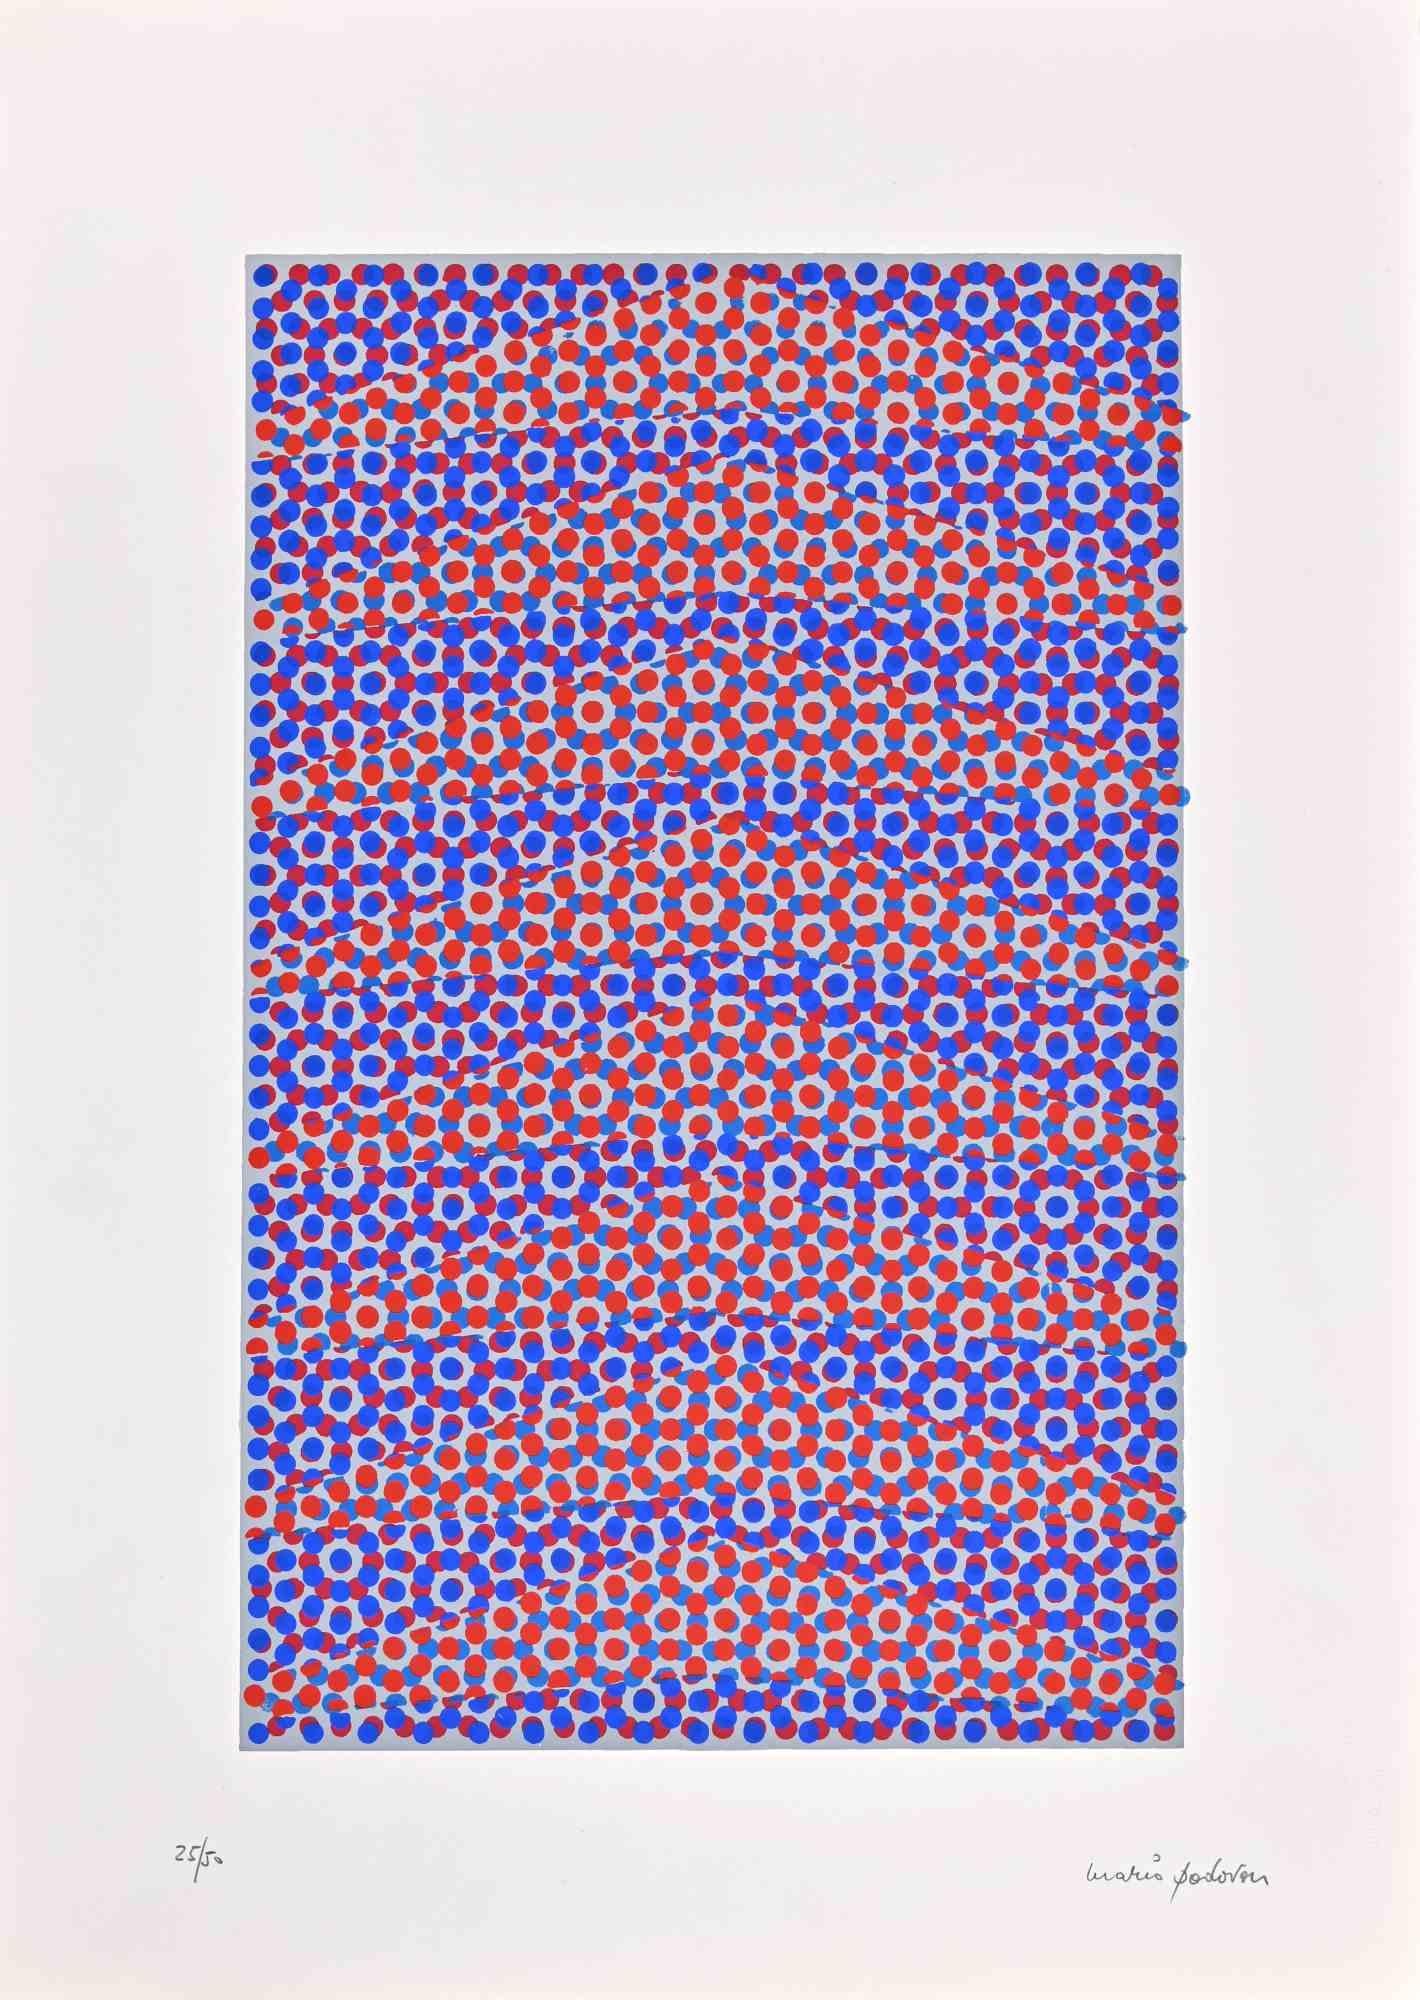 Composition abstraite - Impression sérigraphiée originale de Mario Padovan - 1971